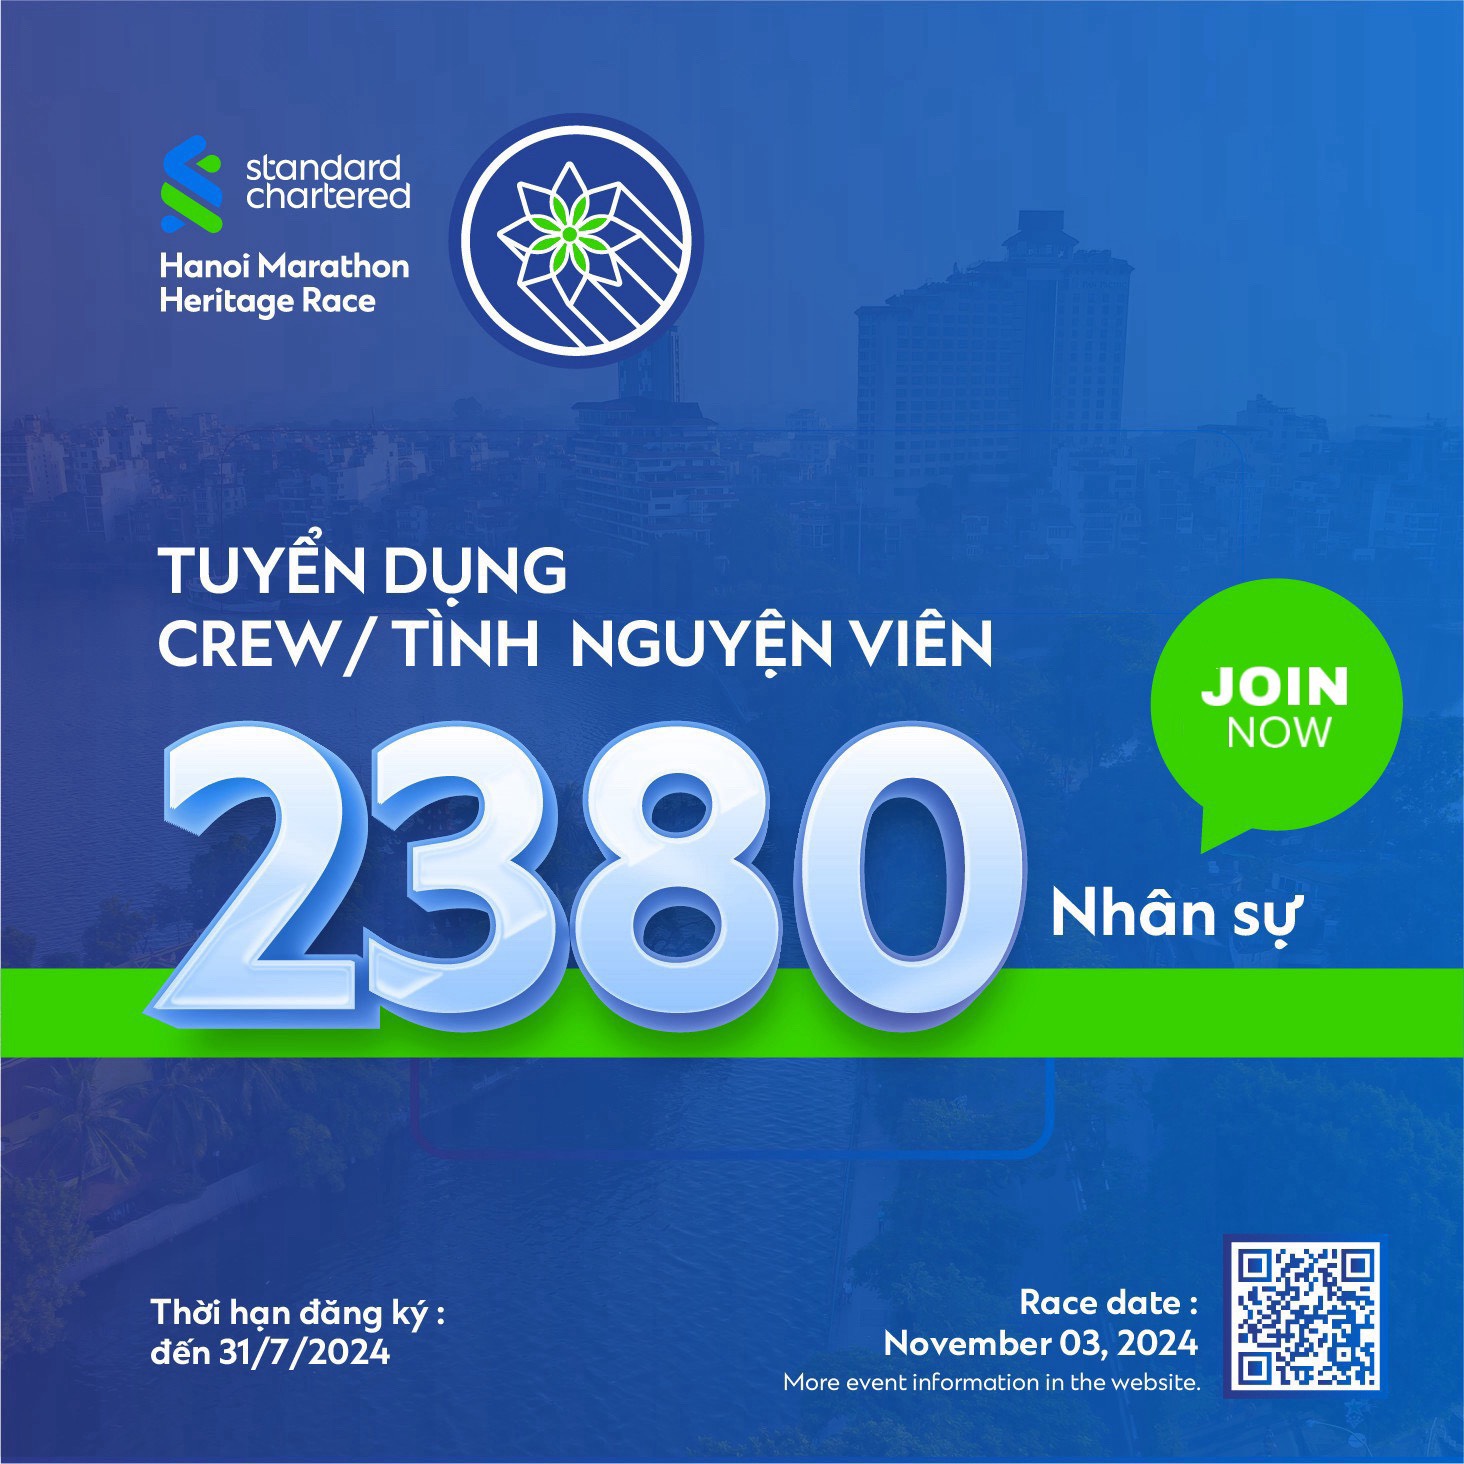 Hiring Crew & Volunteers - Standard Chartered Hanoi Marathon